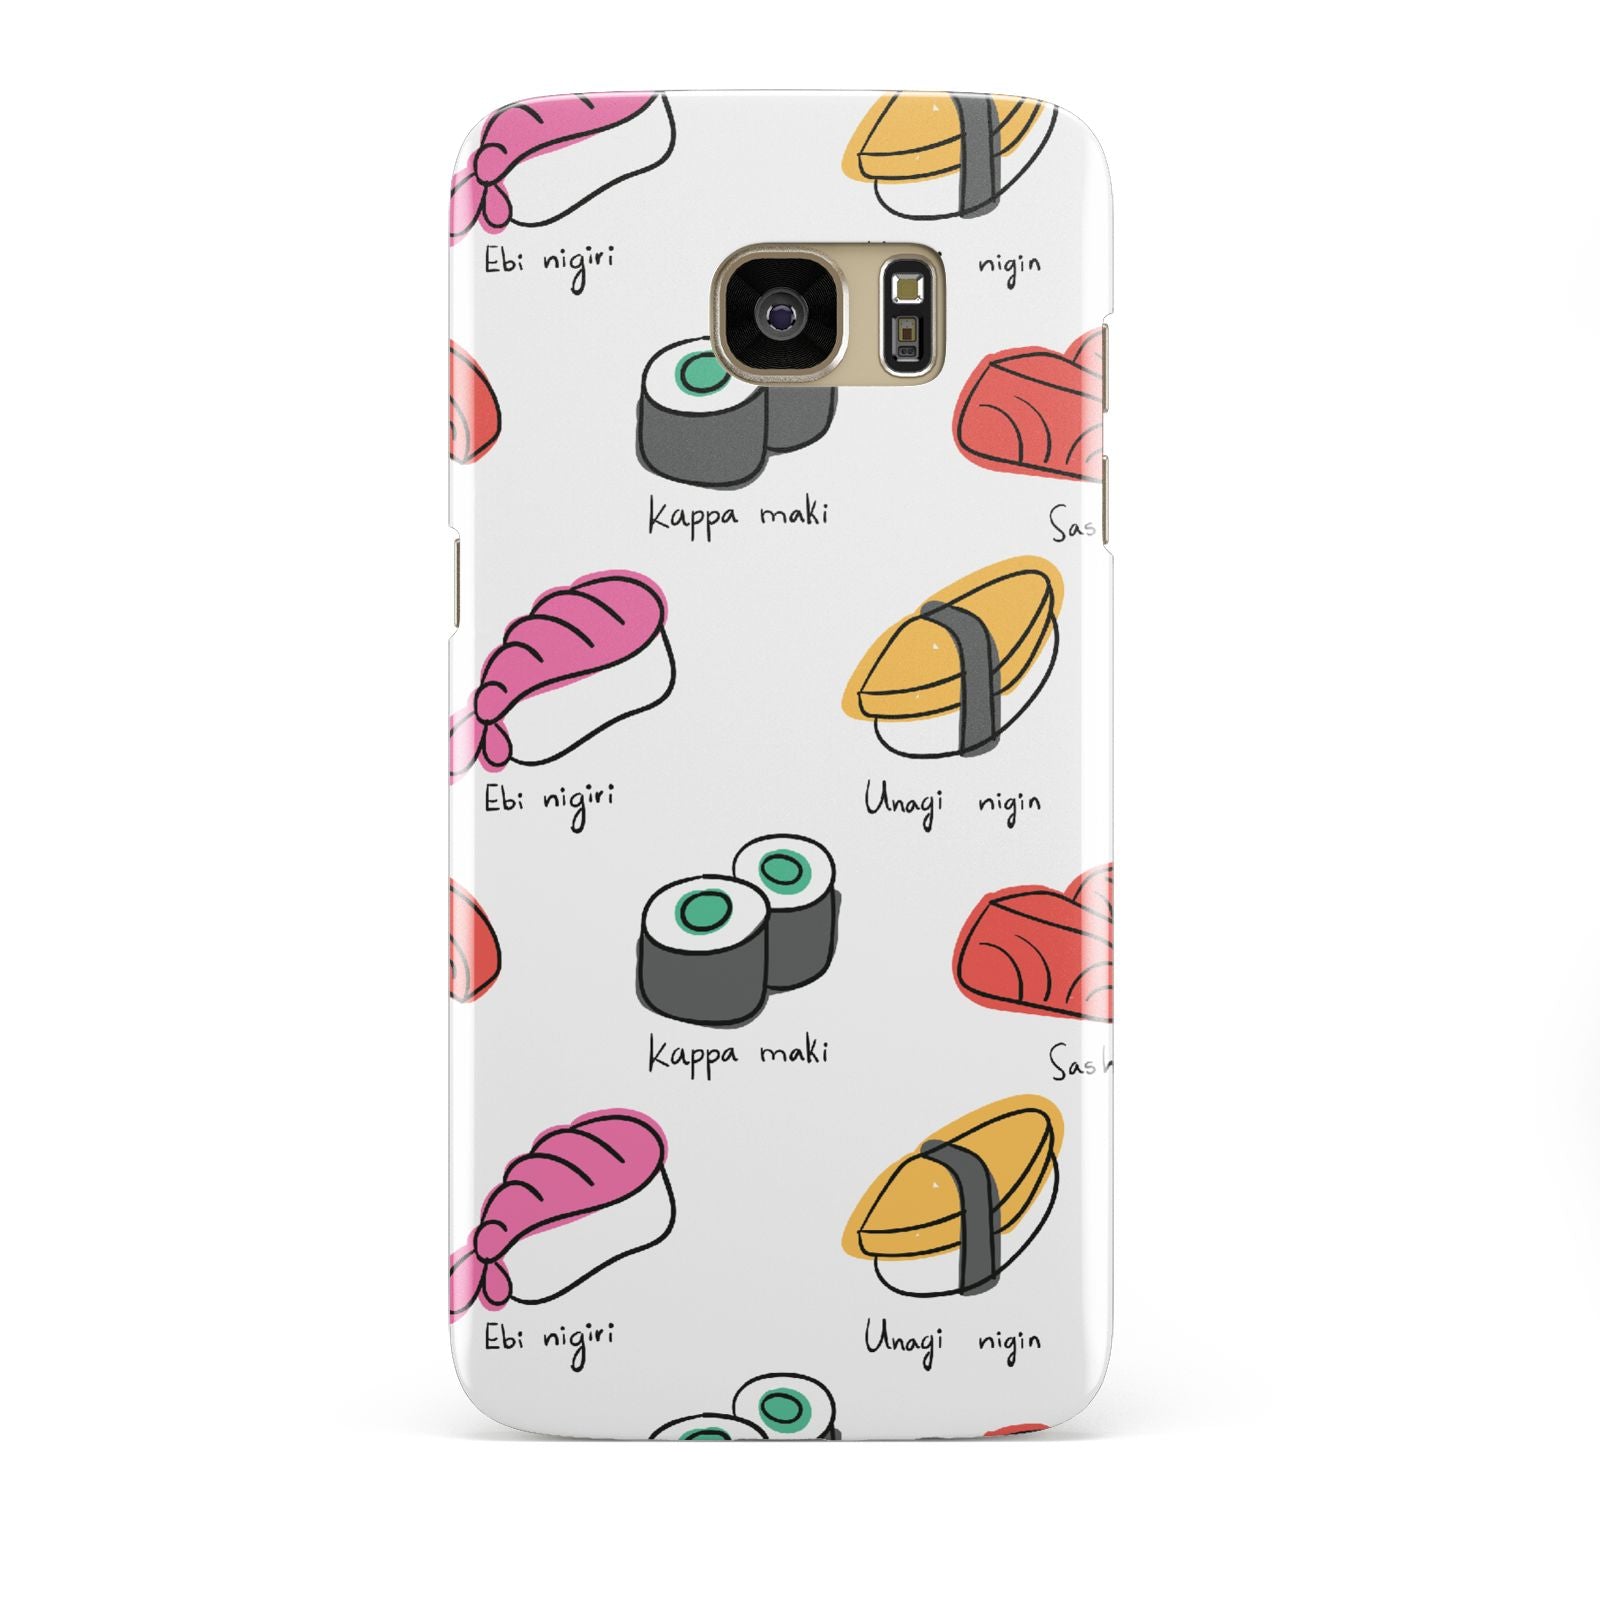 Sashimi Kappa Maki Sushi Samsung Galaxy S7 Edge Case